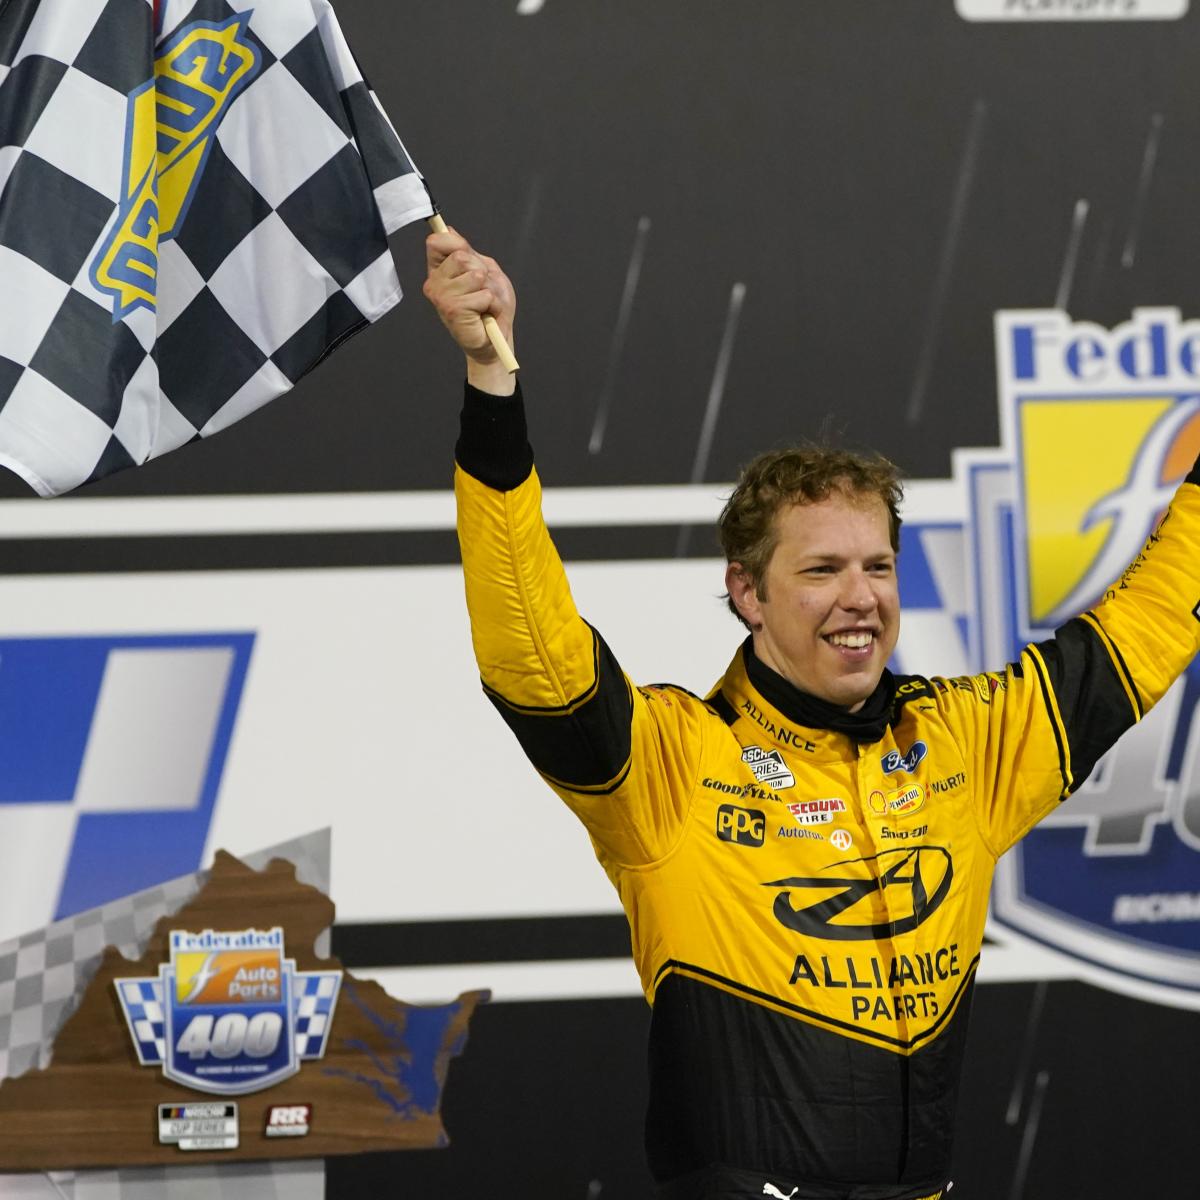 NASCAR at Richmond 2020 Results: Brad Keselowski Wins Instant-Song Speed